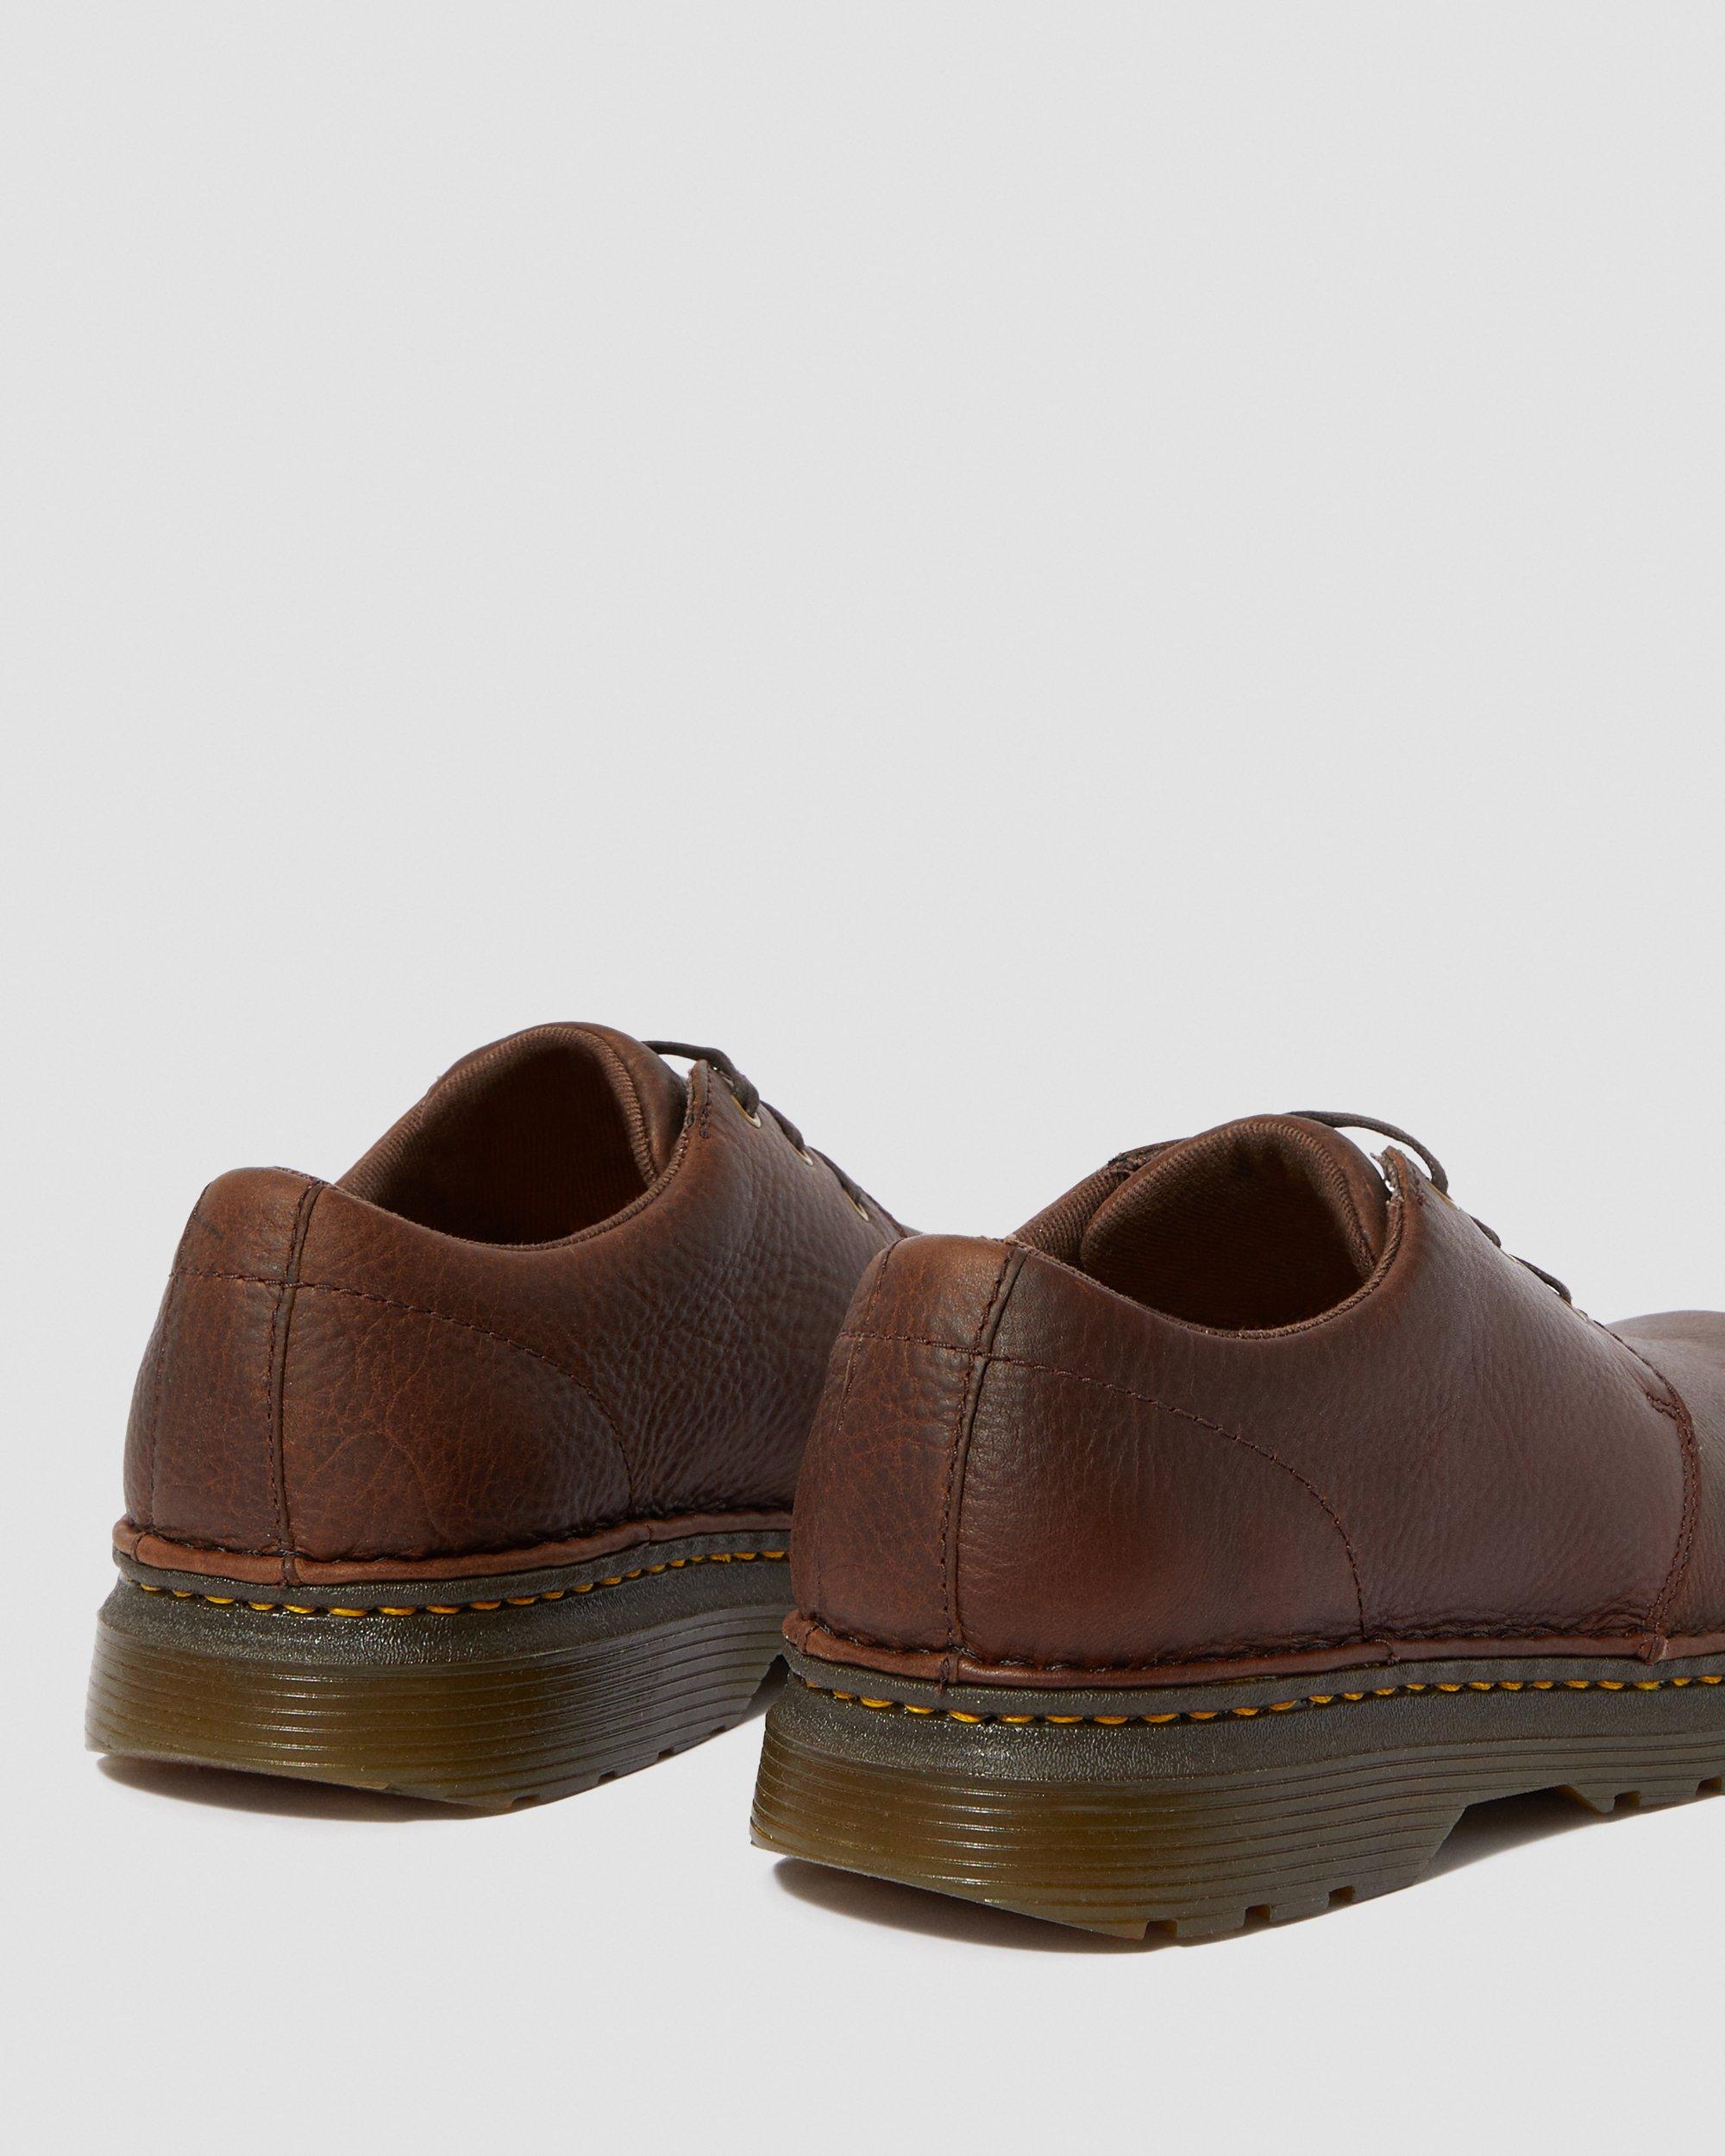 DR MARTENS Hazeldon Men's Grizzly Leather Casual Shoes